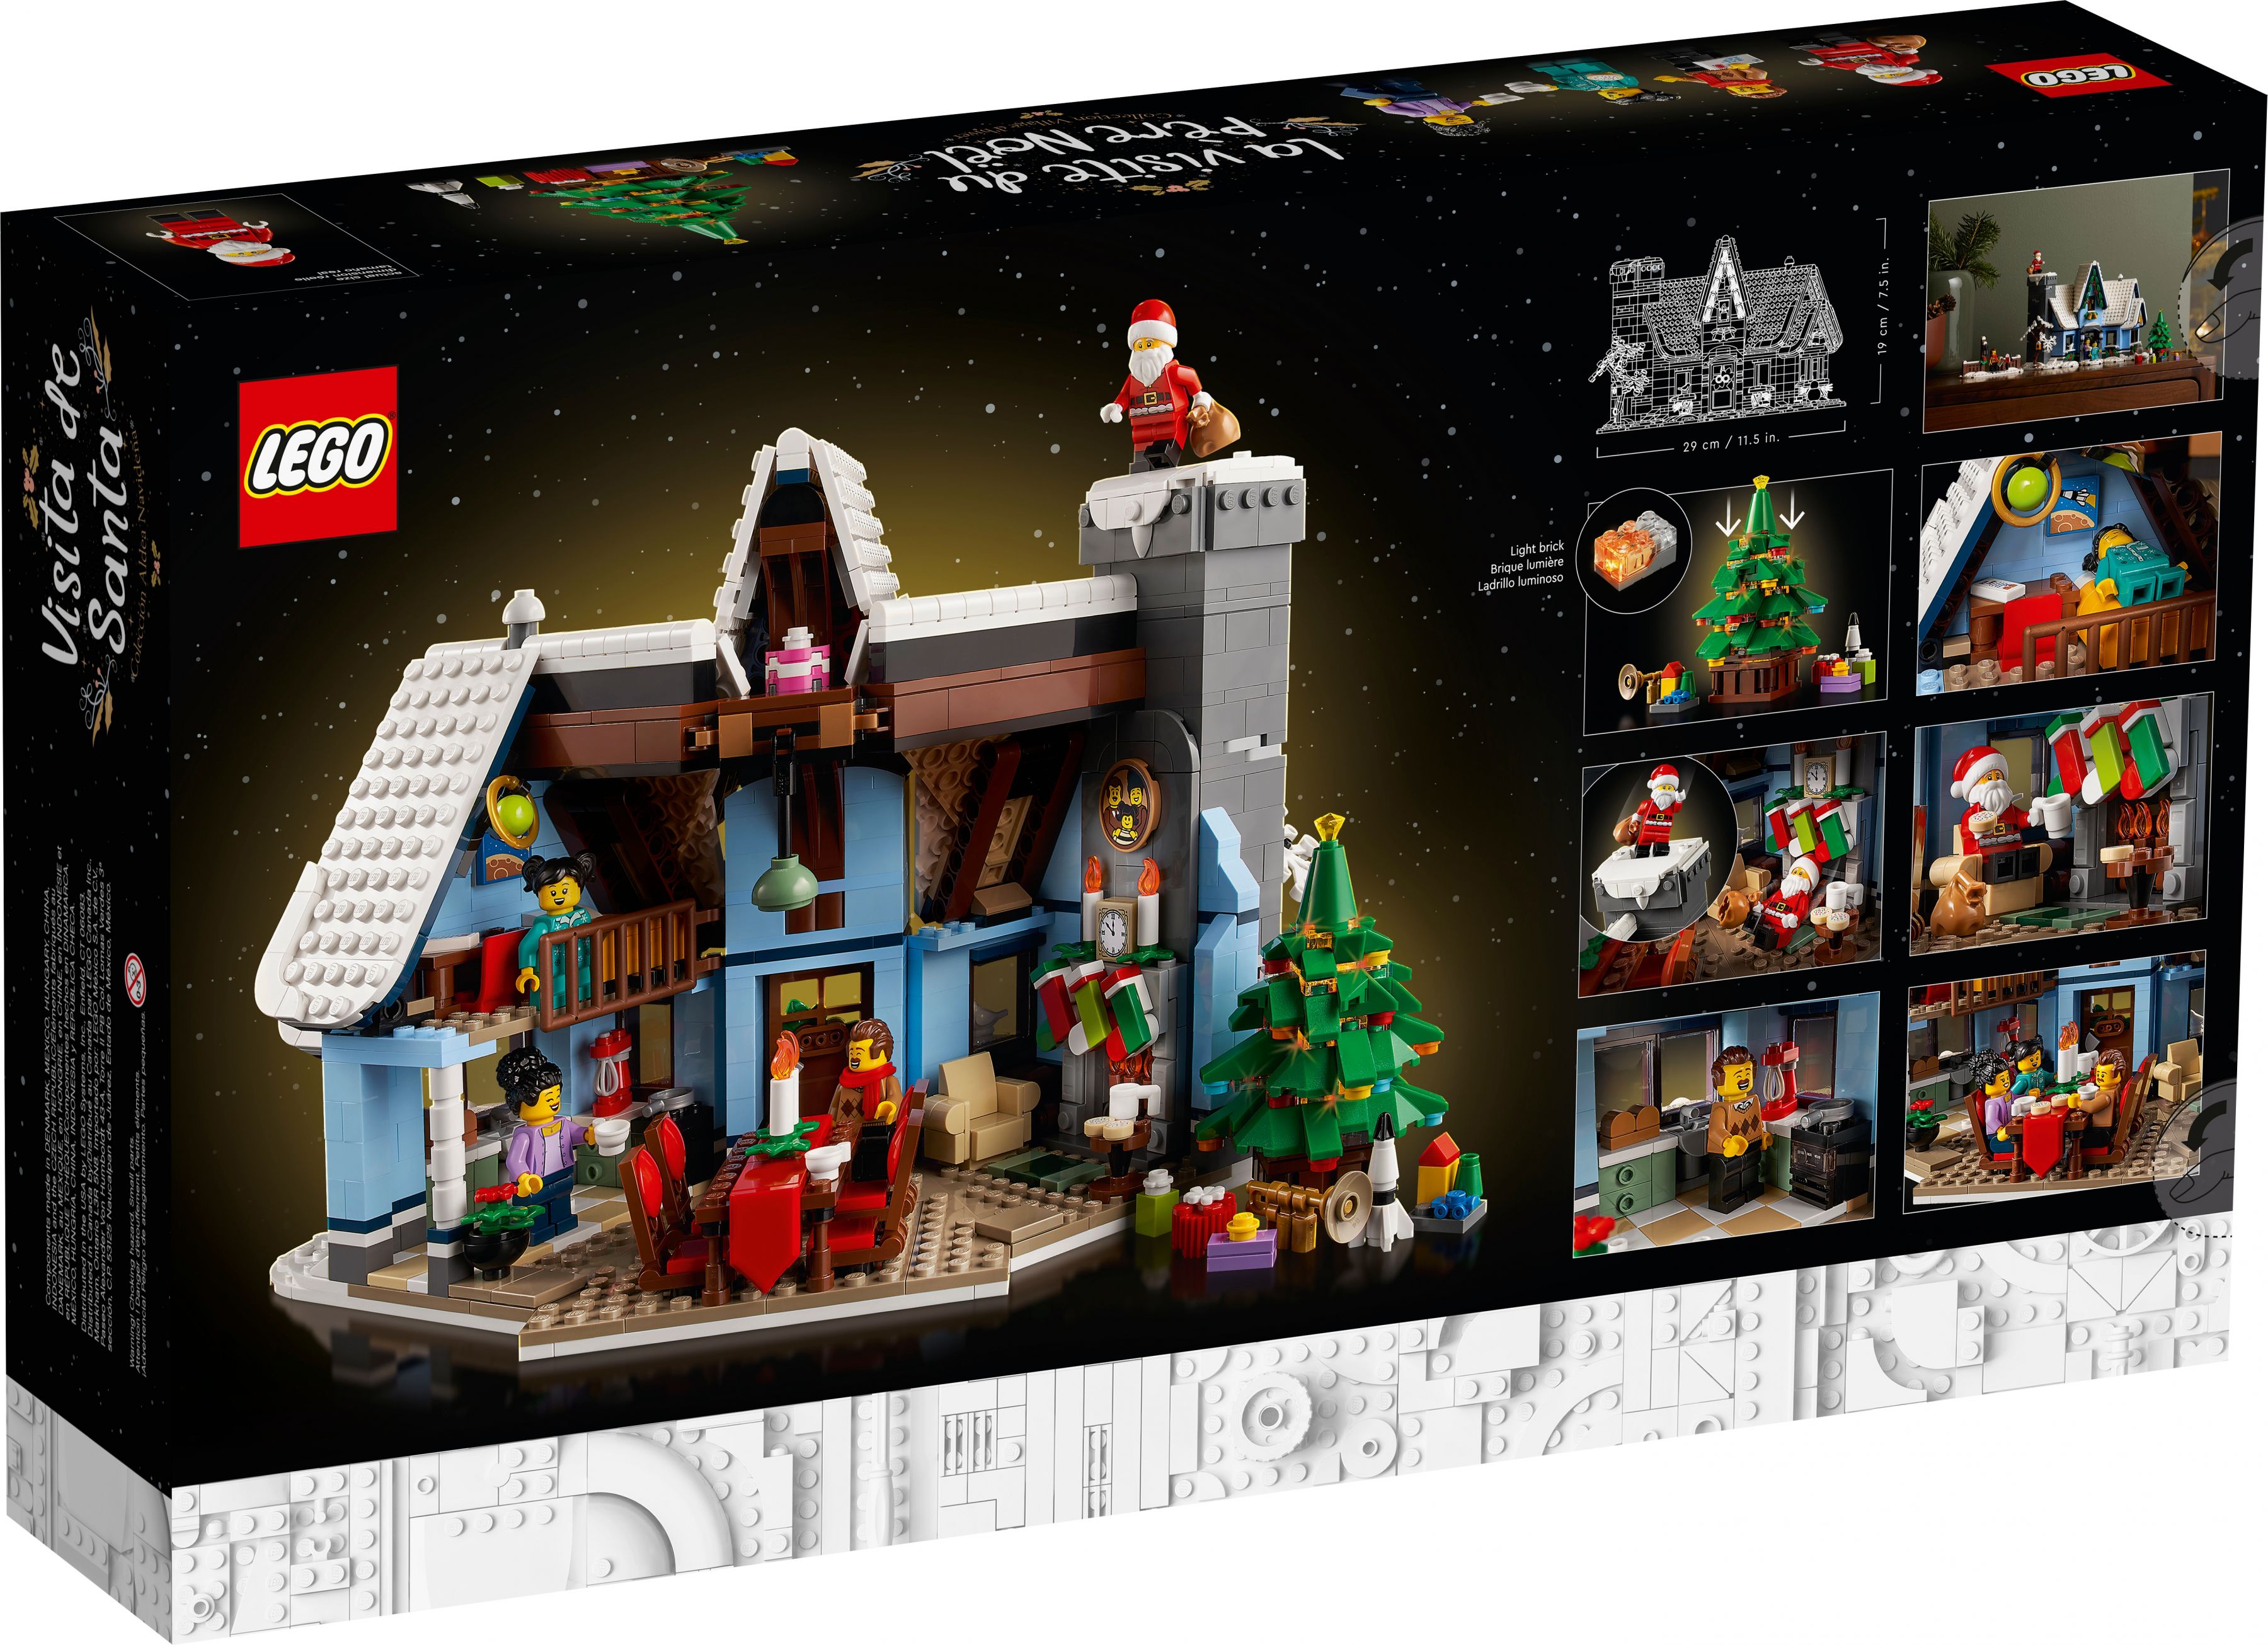 LEGO Advanced Models 10293 Besuch des Weihnachtsmanns LEGO_10293_box5_v39.jpg